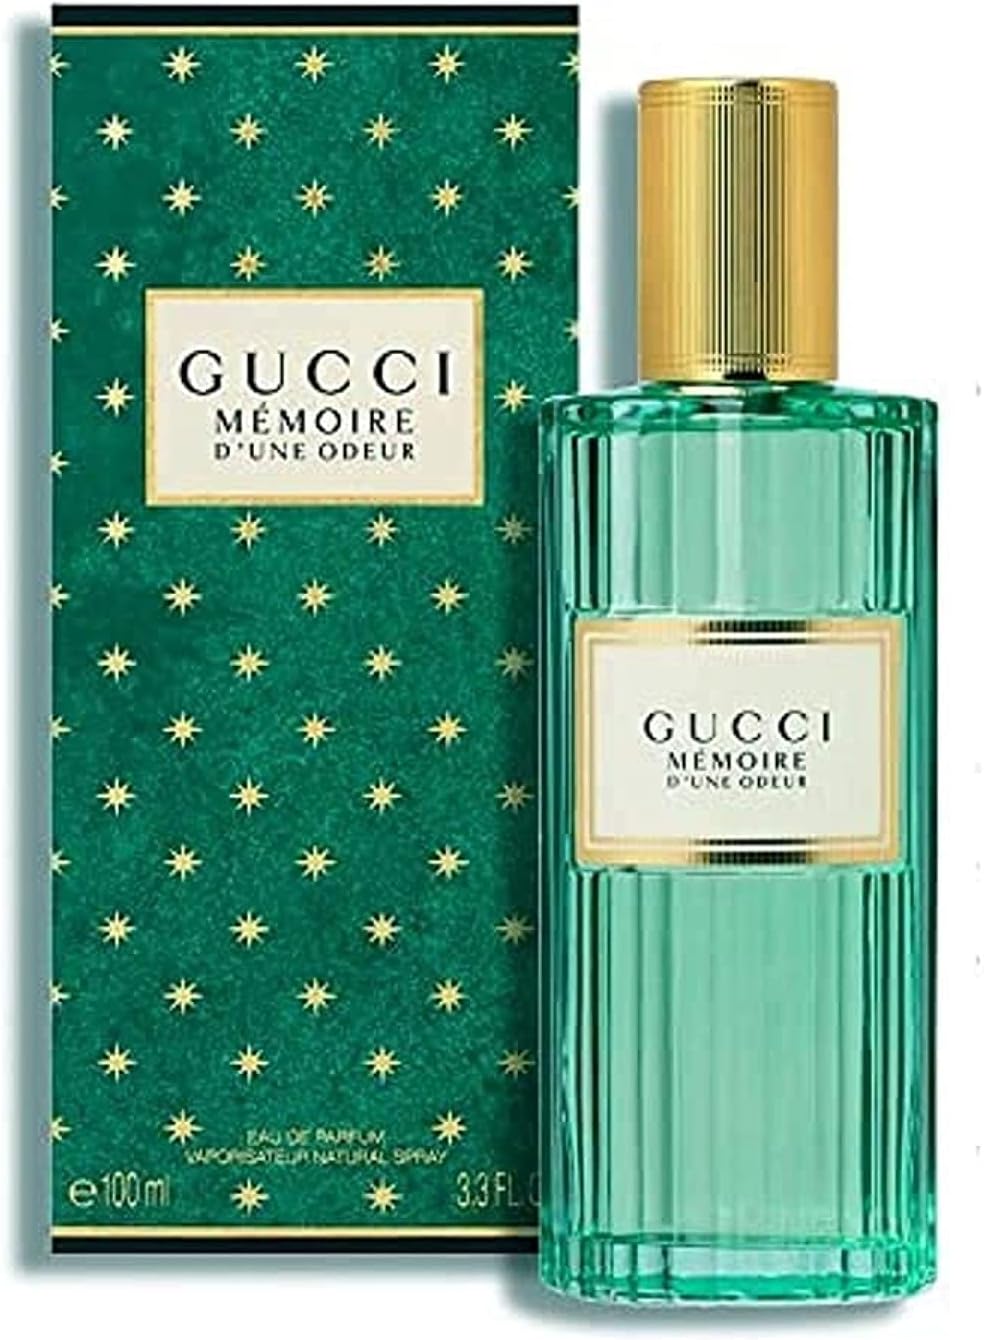 ادکلن گوچی مدل Gucci Memoire DUne 100 ml - ارسال 10 الی 15 روز کاری